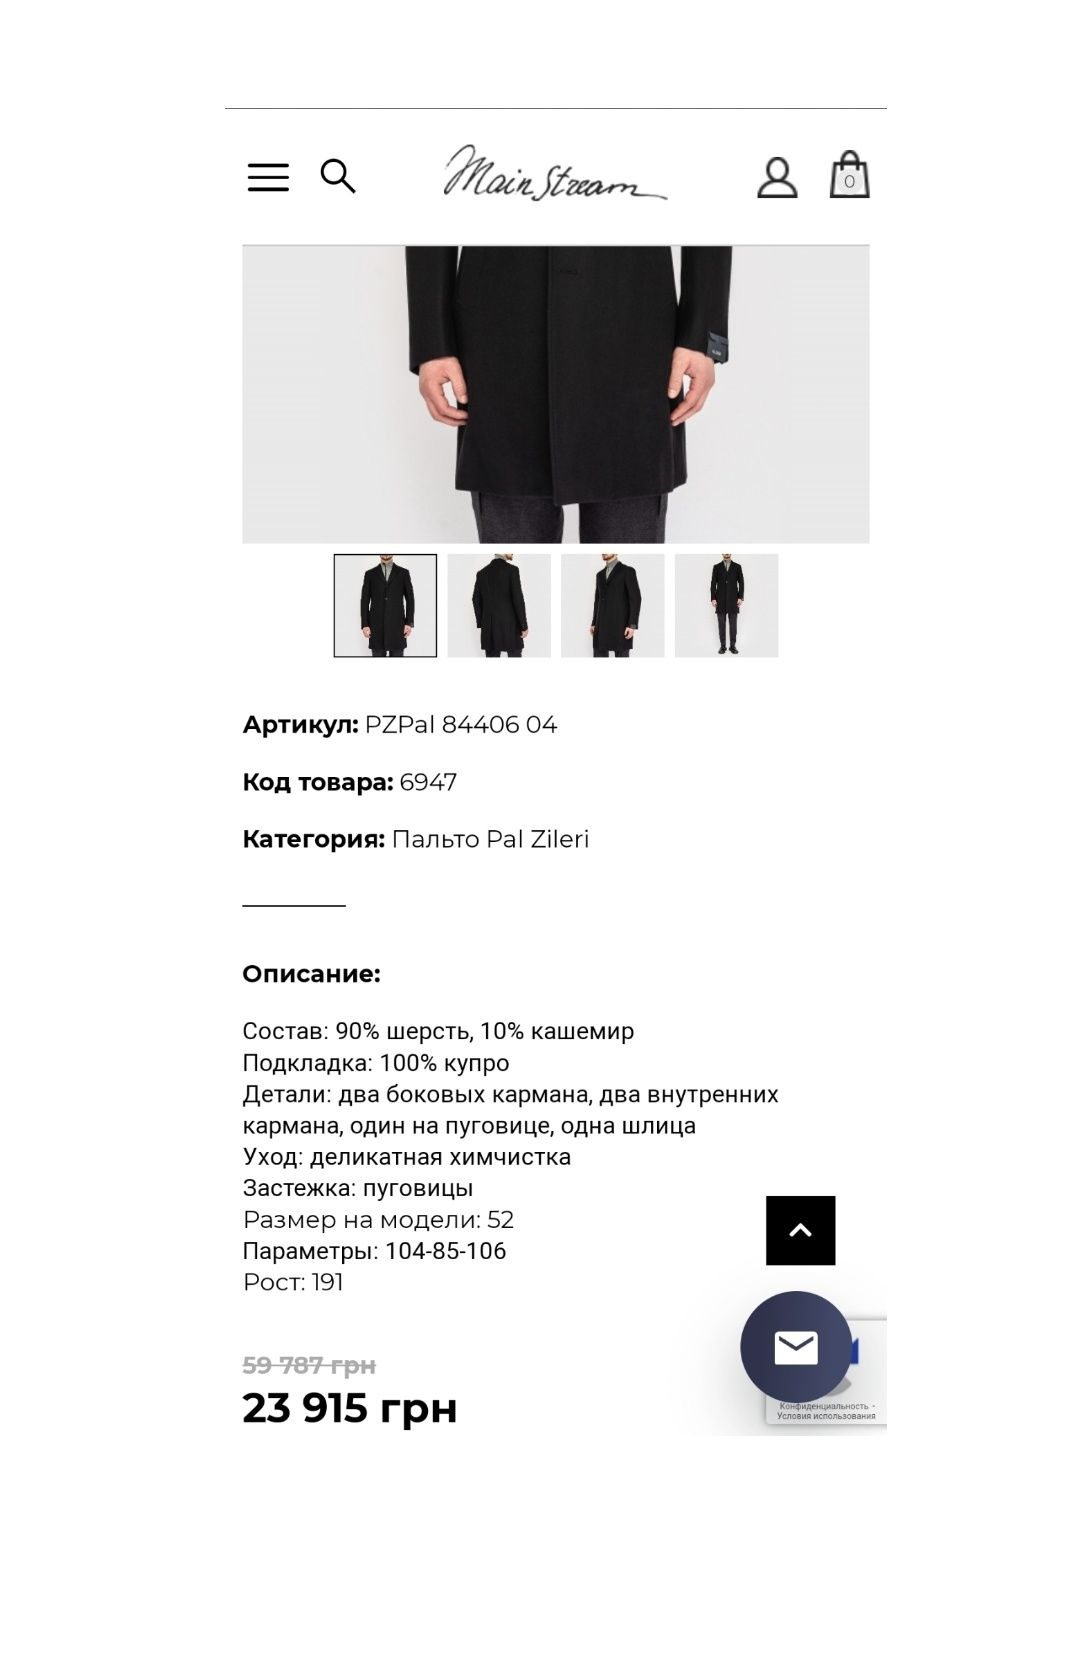 PAL ZILERI LAB ITALY 52 размер брендовое пальто премиум класса